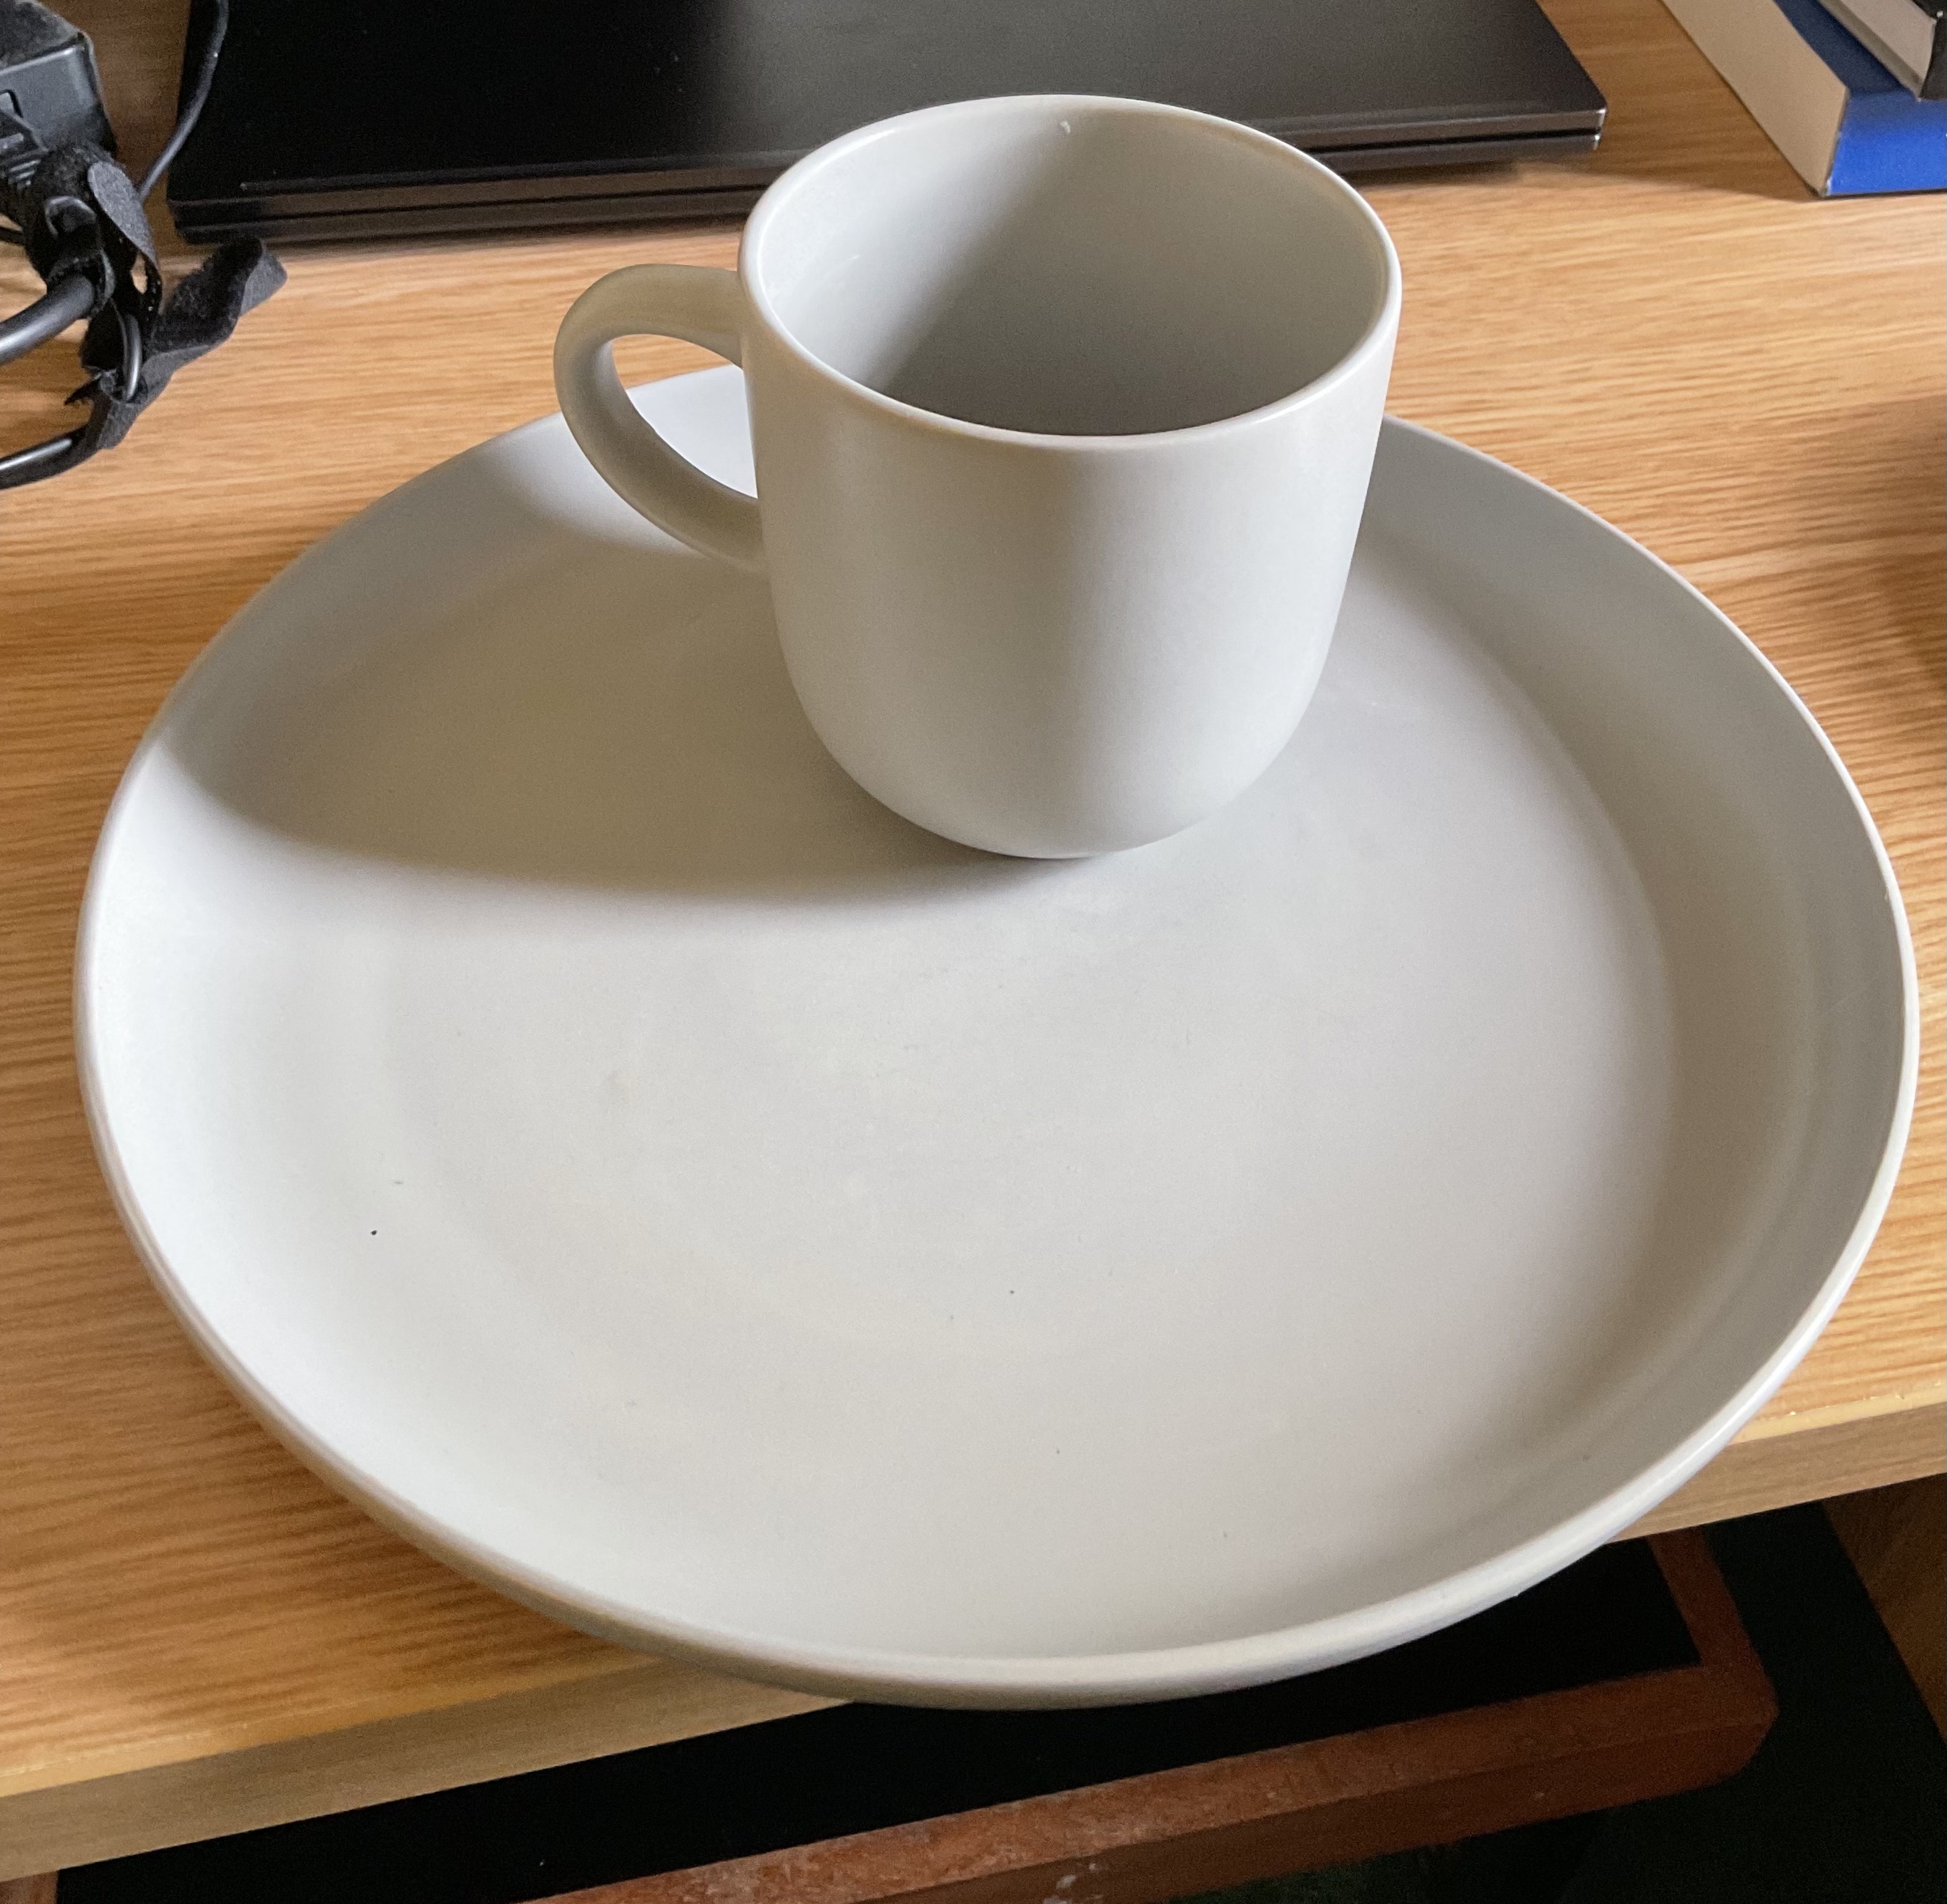 Plate-Mug set